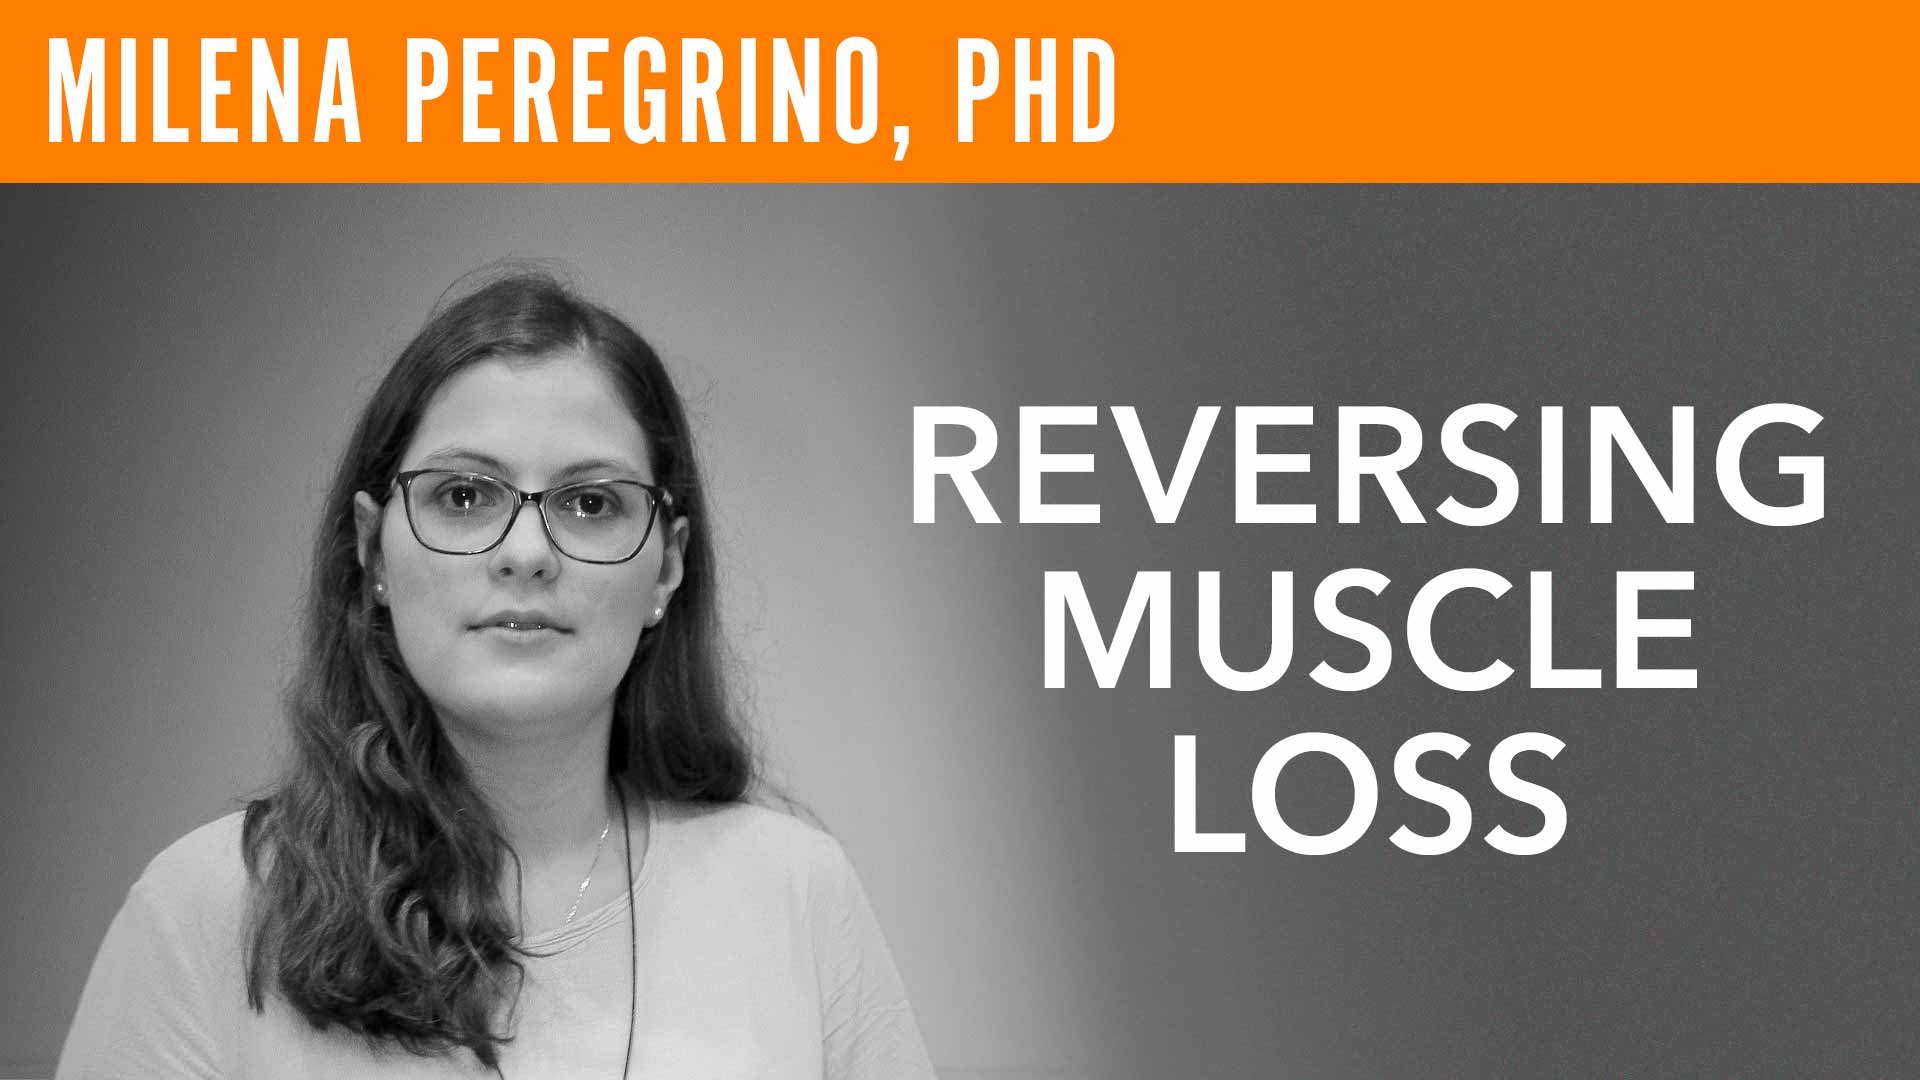 Milena Peregrino, "Reversing Muscle Loss"